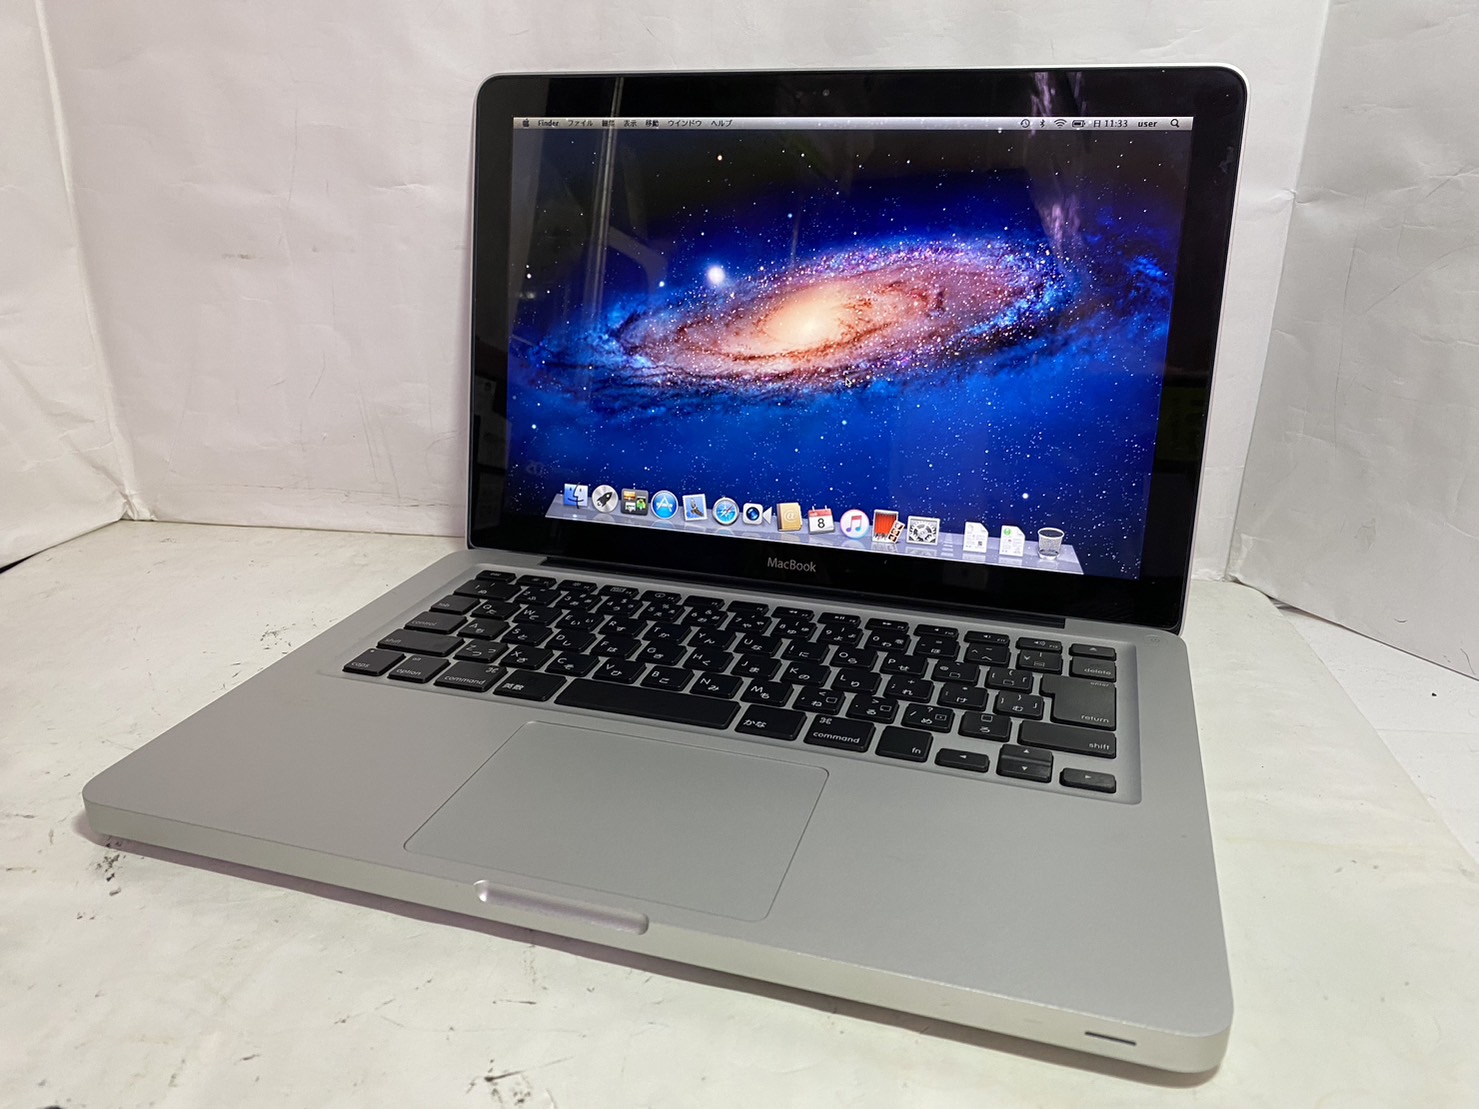 APPLE(アップル) MacBook Pro (13-inch, Mid 2008) A1278の激安通販 ...